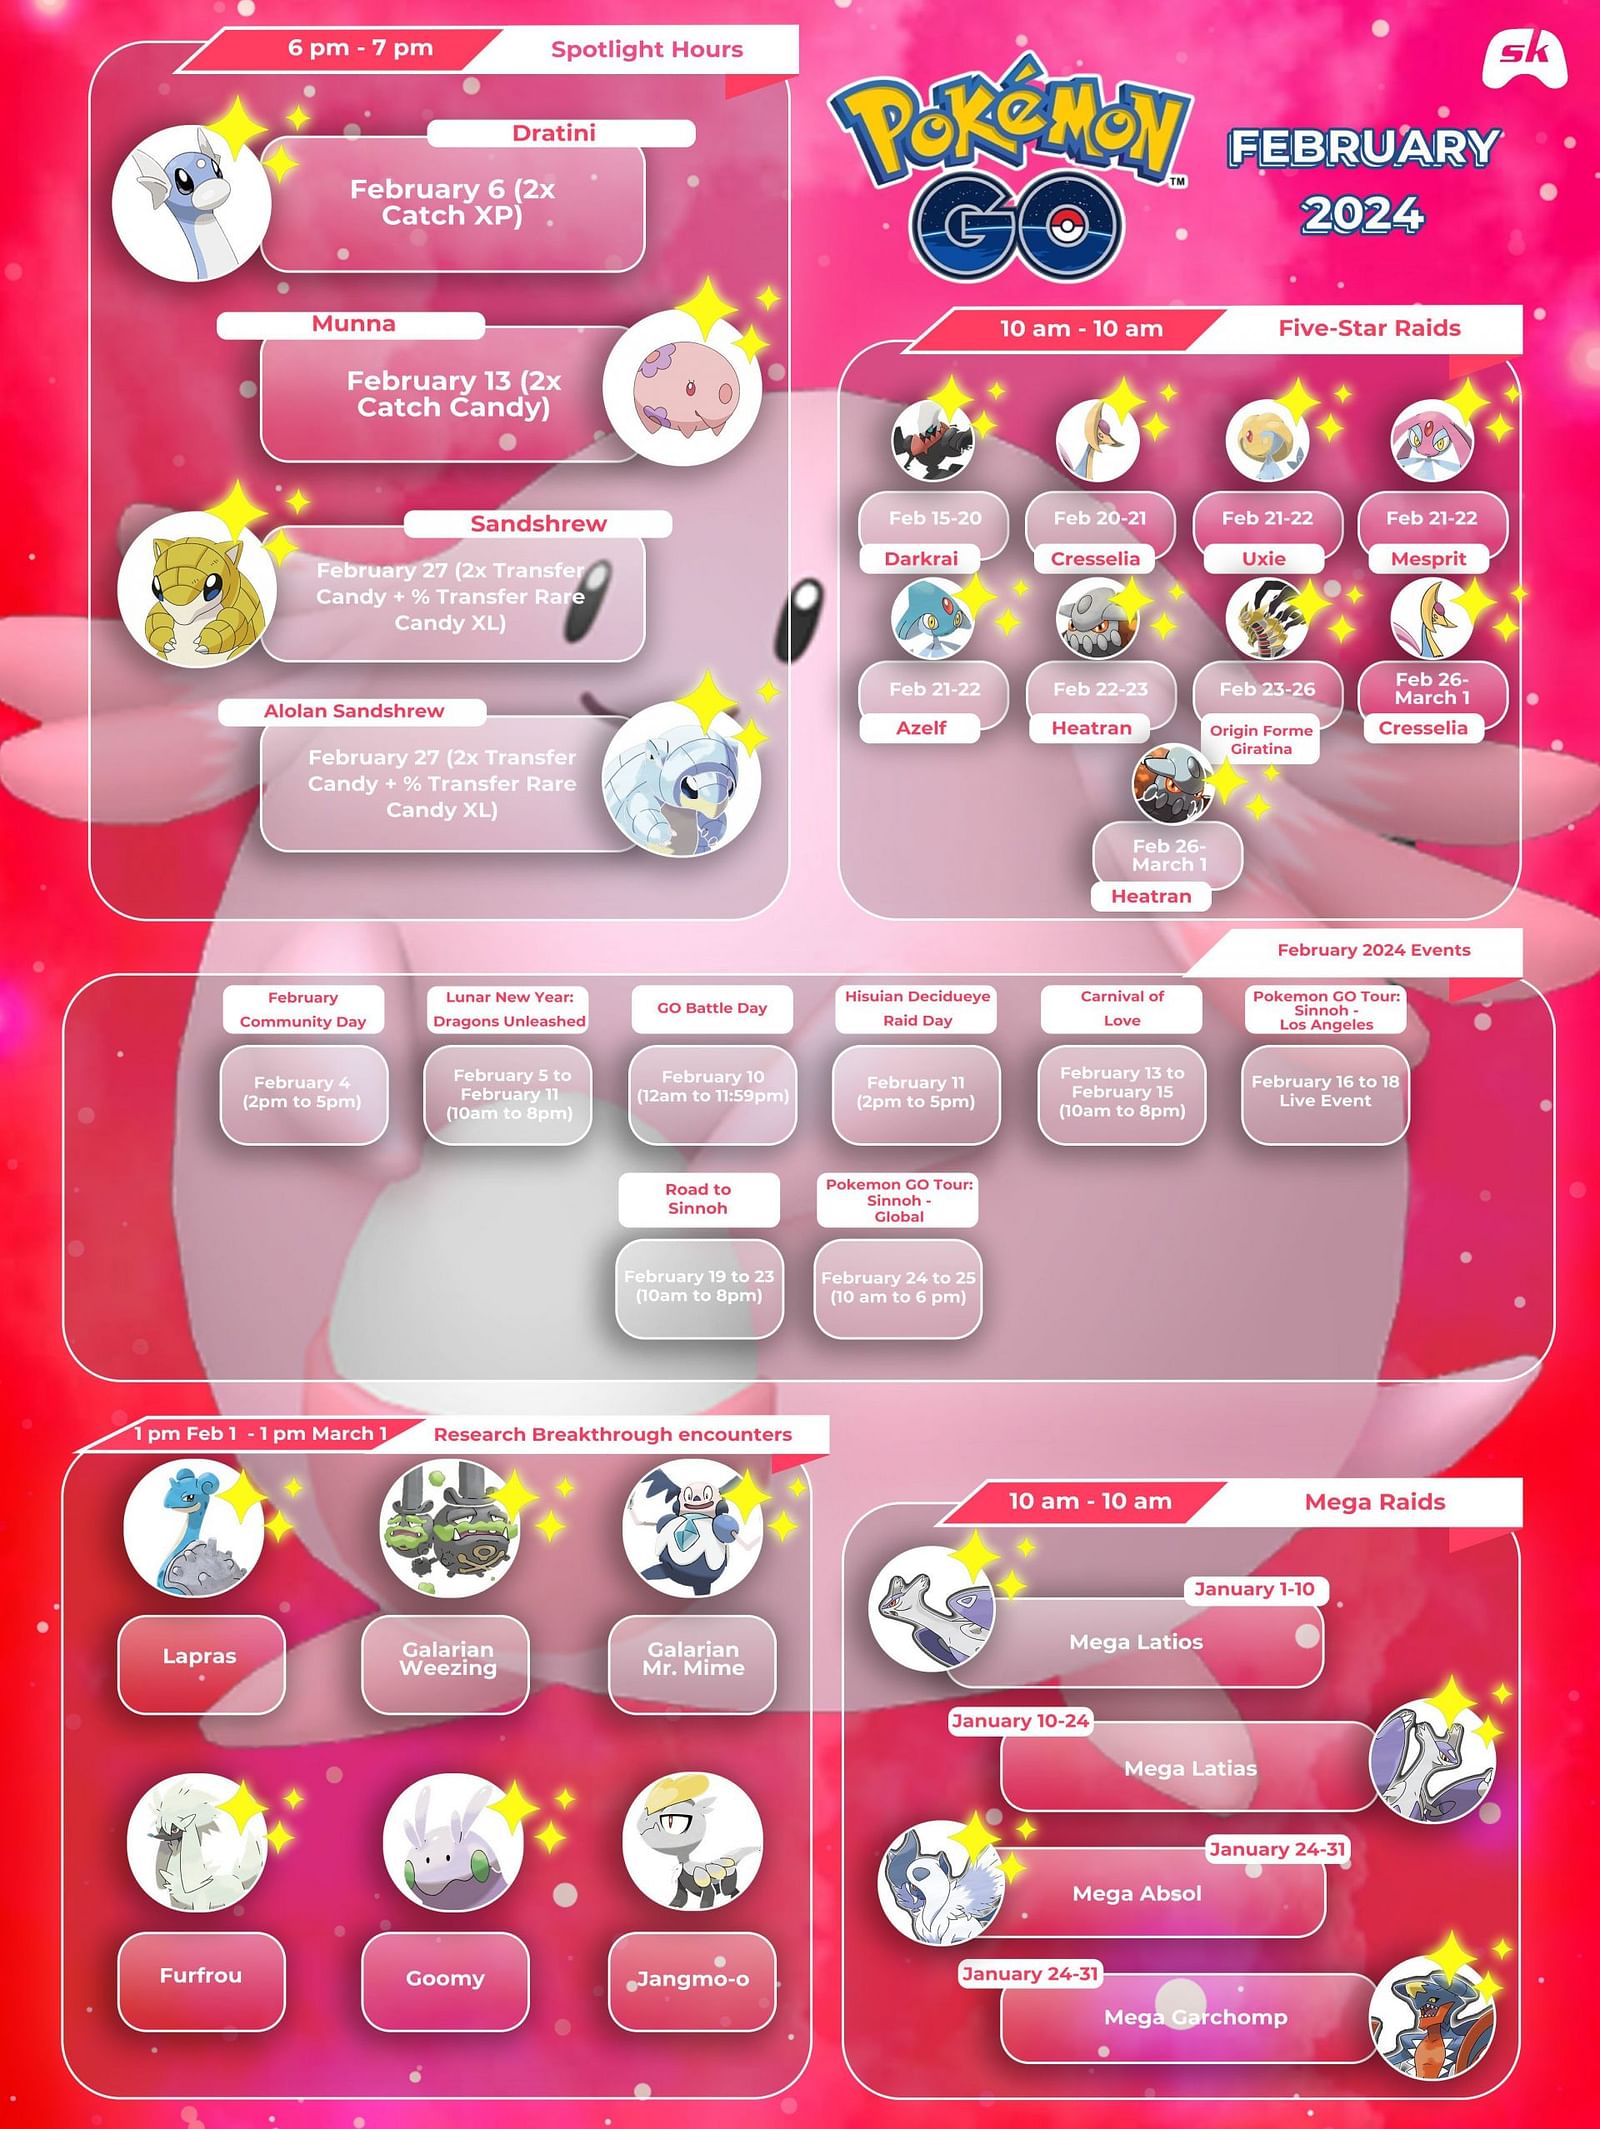 Pokemon GO February 2024 infographic Events, raid bosses, Spotlight